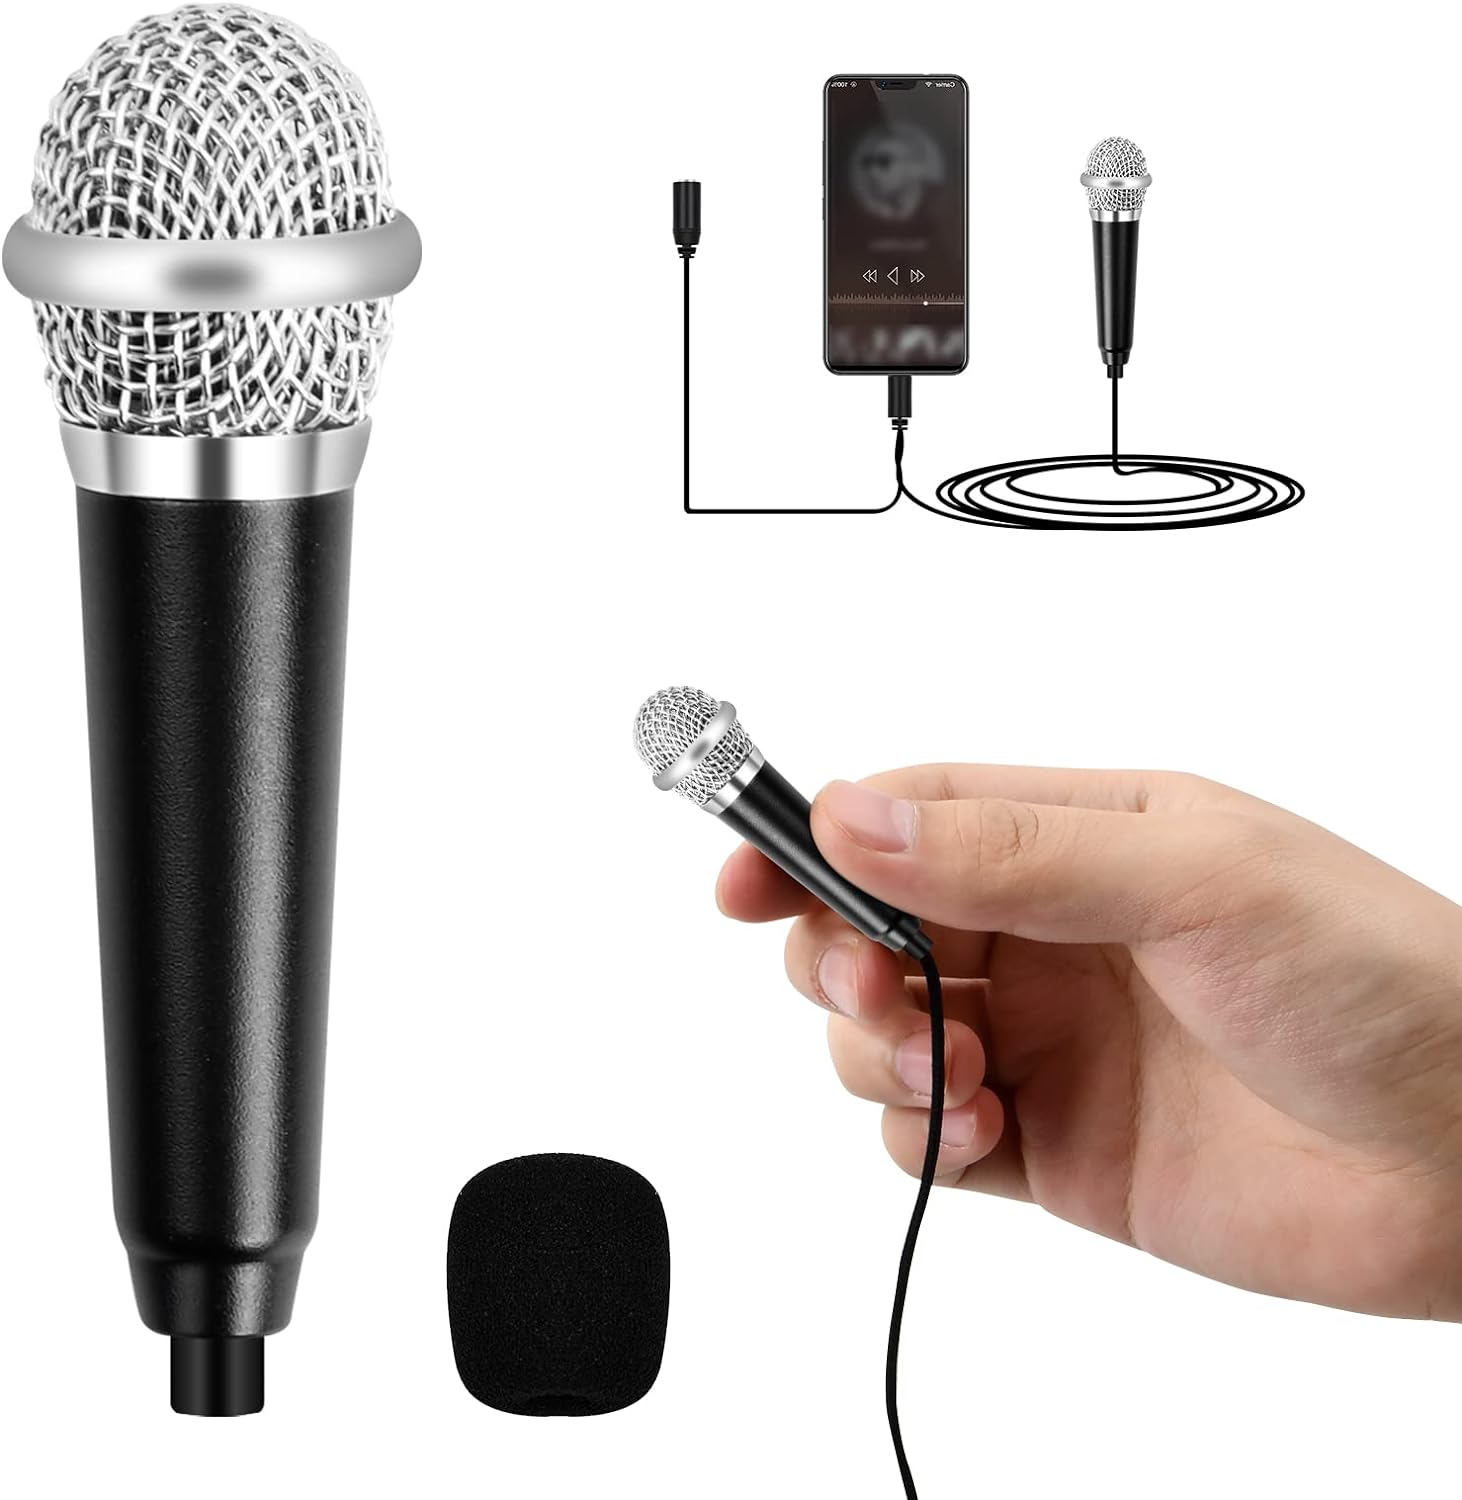 Mini micrófono Karaoke, micrófono vocal portátil con cable universal de 3,5 mm, mini micrófono portátil con cable de metal para teléfonos móviles y portátiles